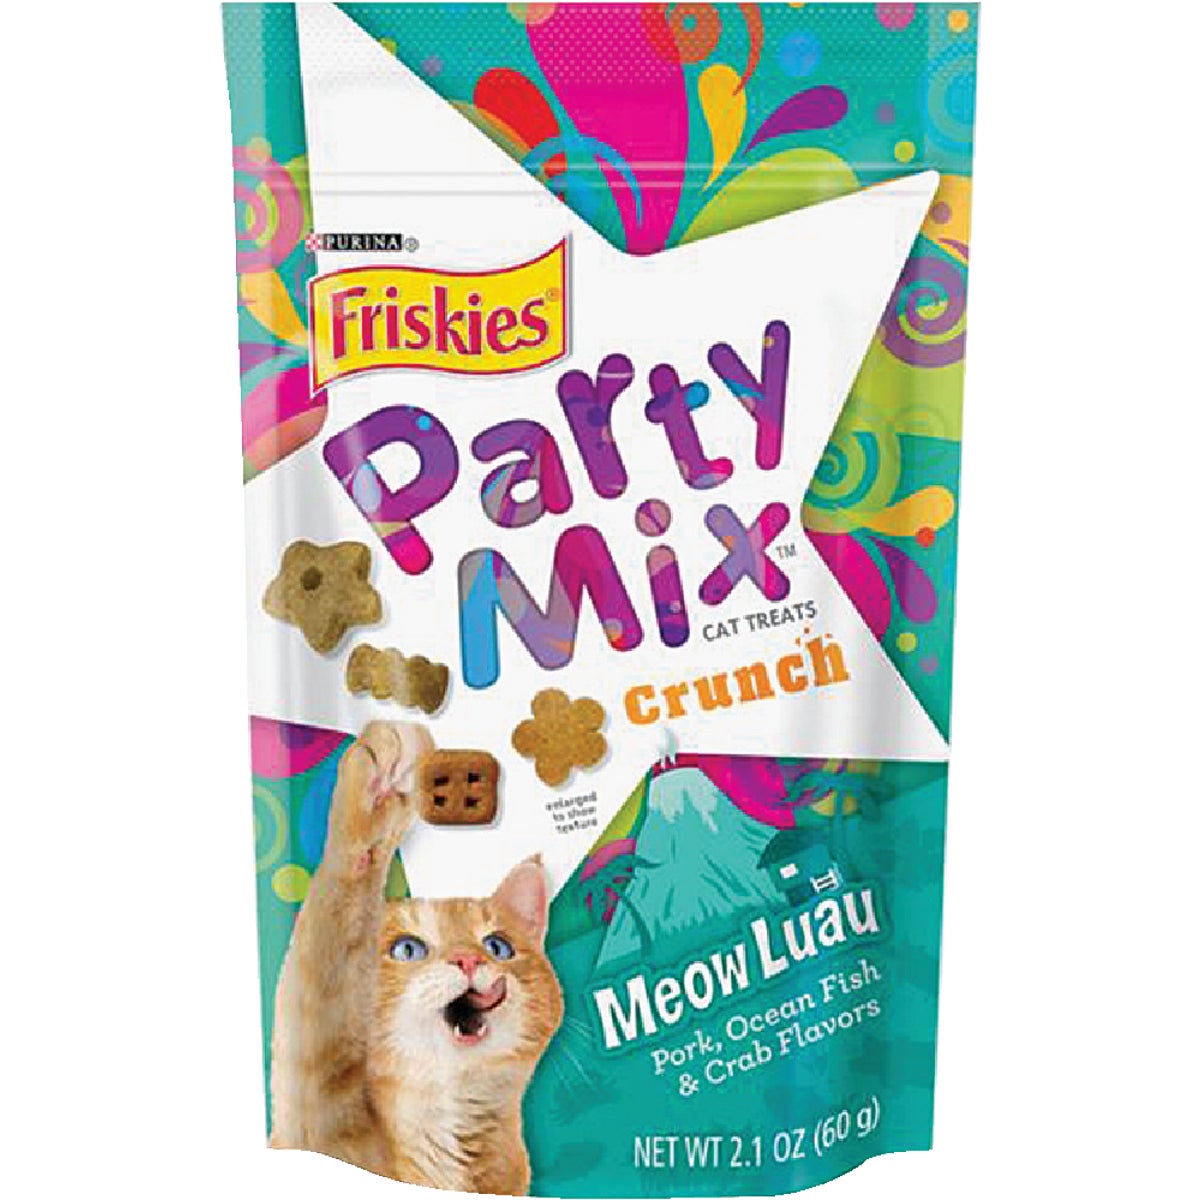 Purina Party Mix Meow Luau-Pork, Ocean Fish, & Crab 2.1 Oz. Cat Treat